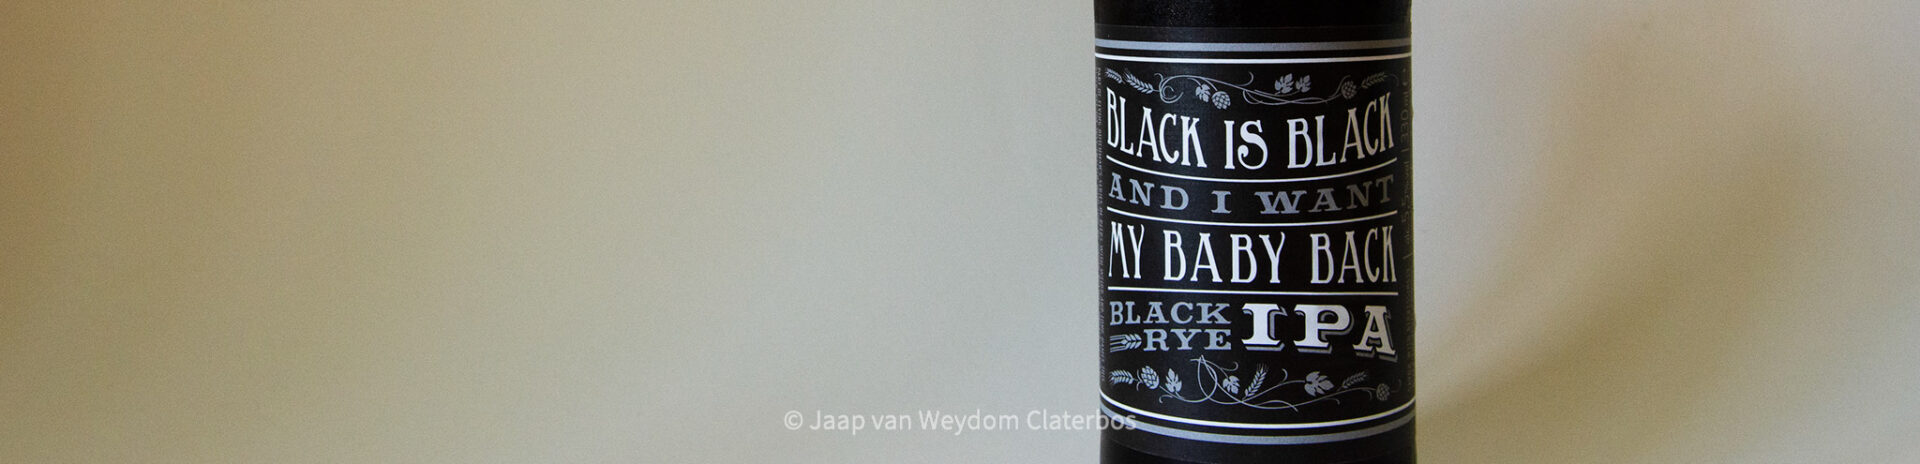 Black Rye IPA - The Flying Dutchman